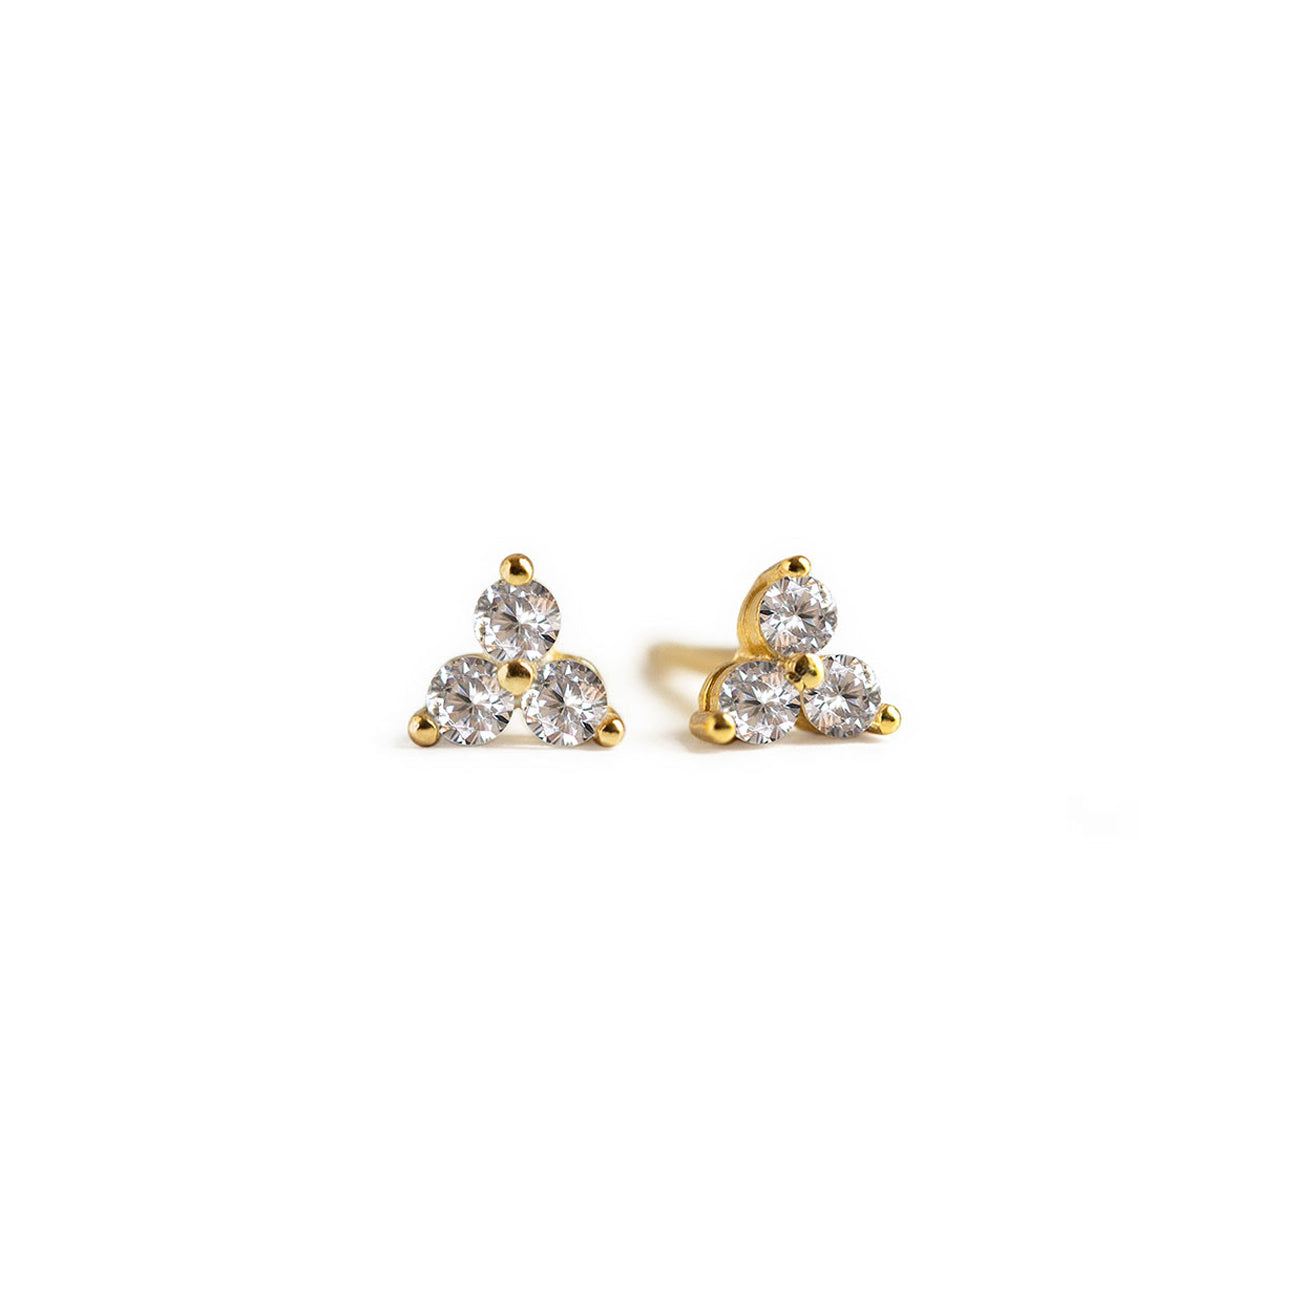  Tiny Gold Clover Stud Earrings